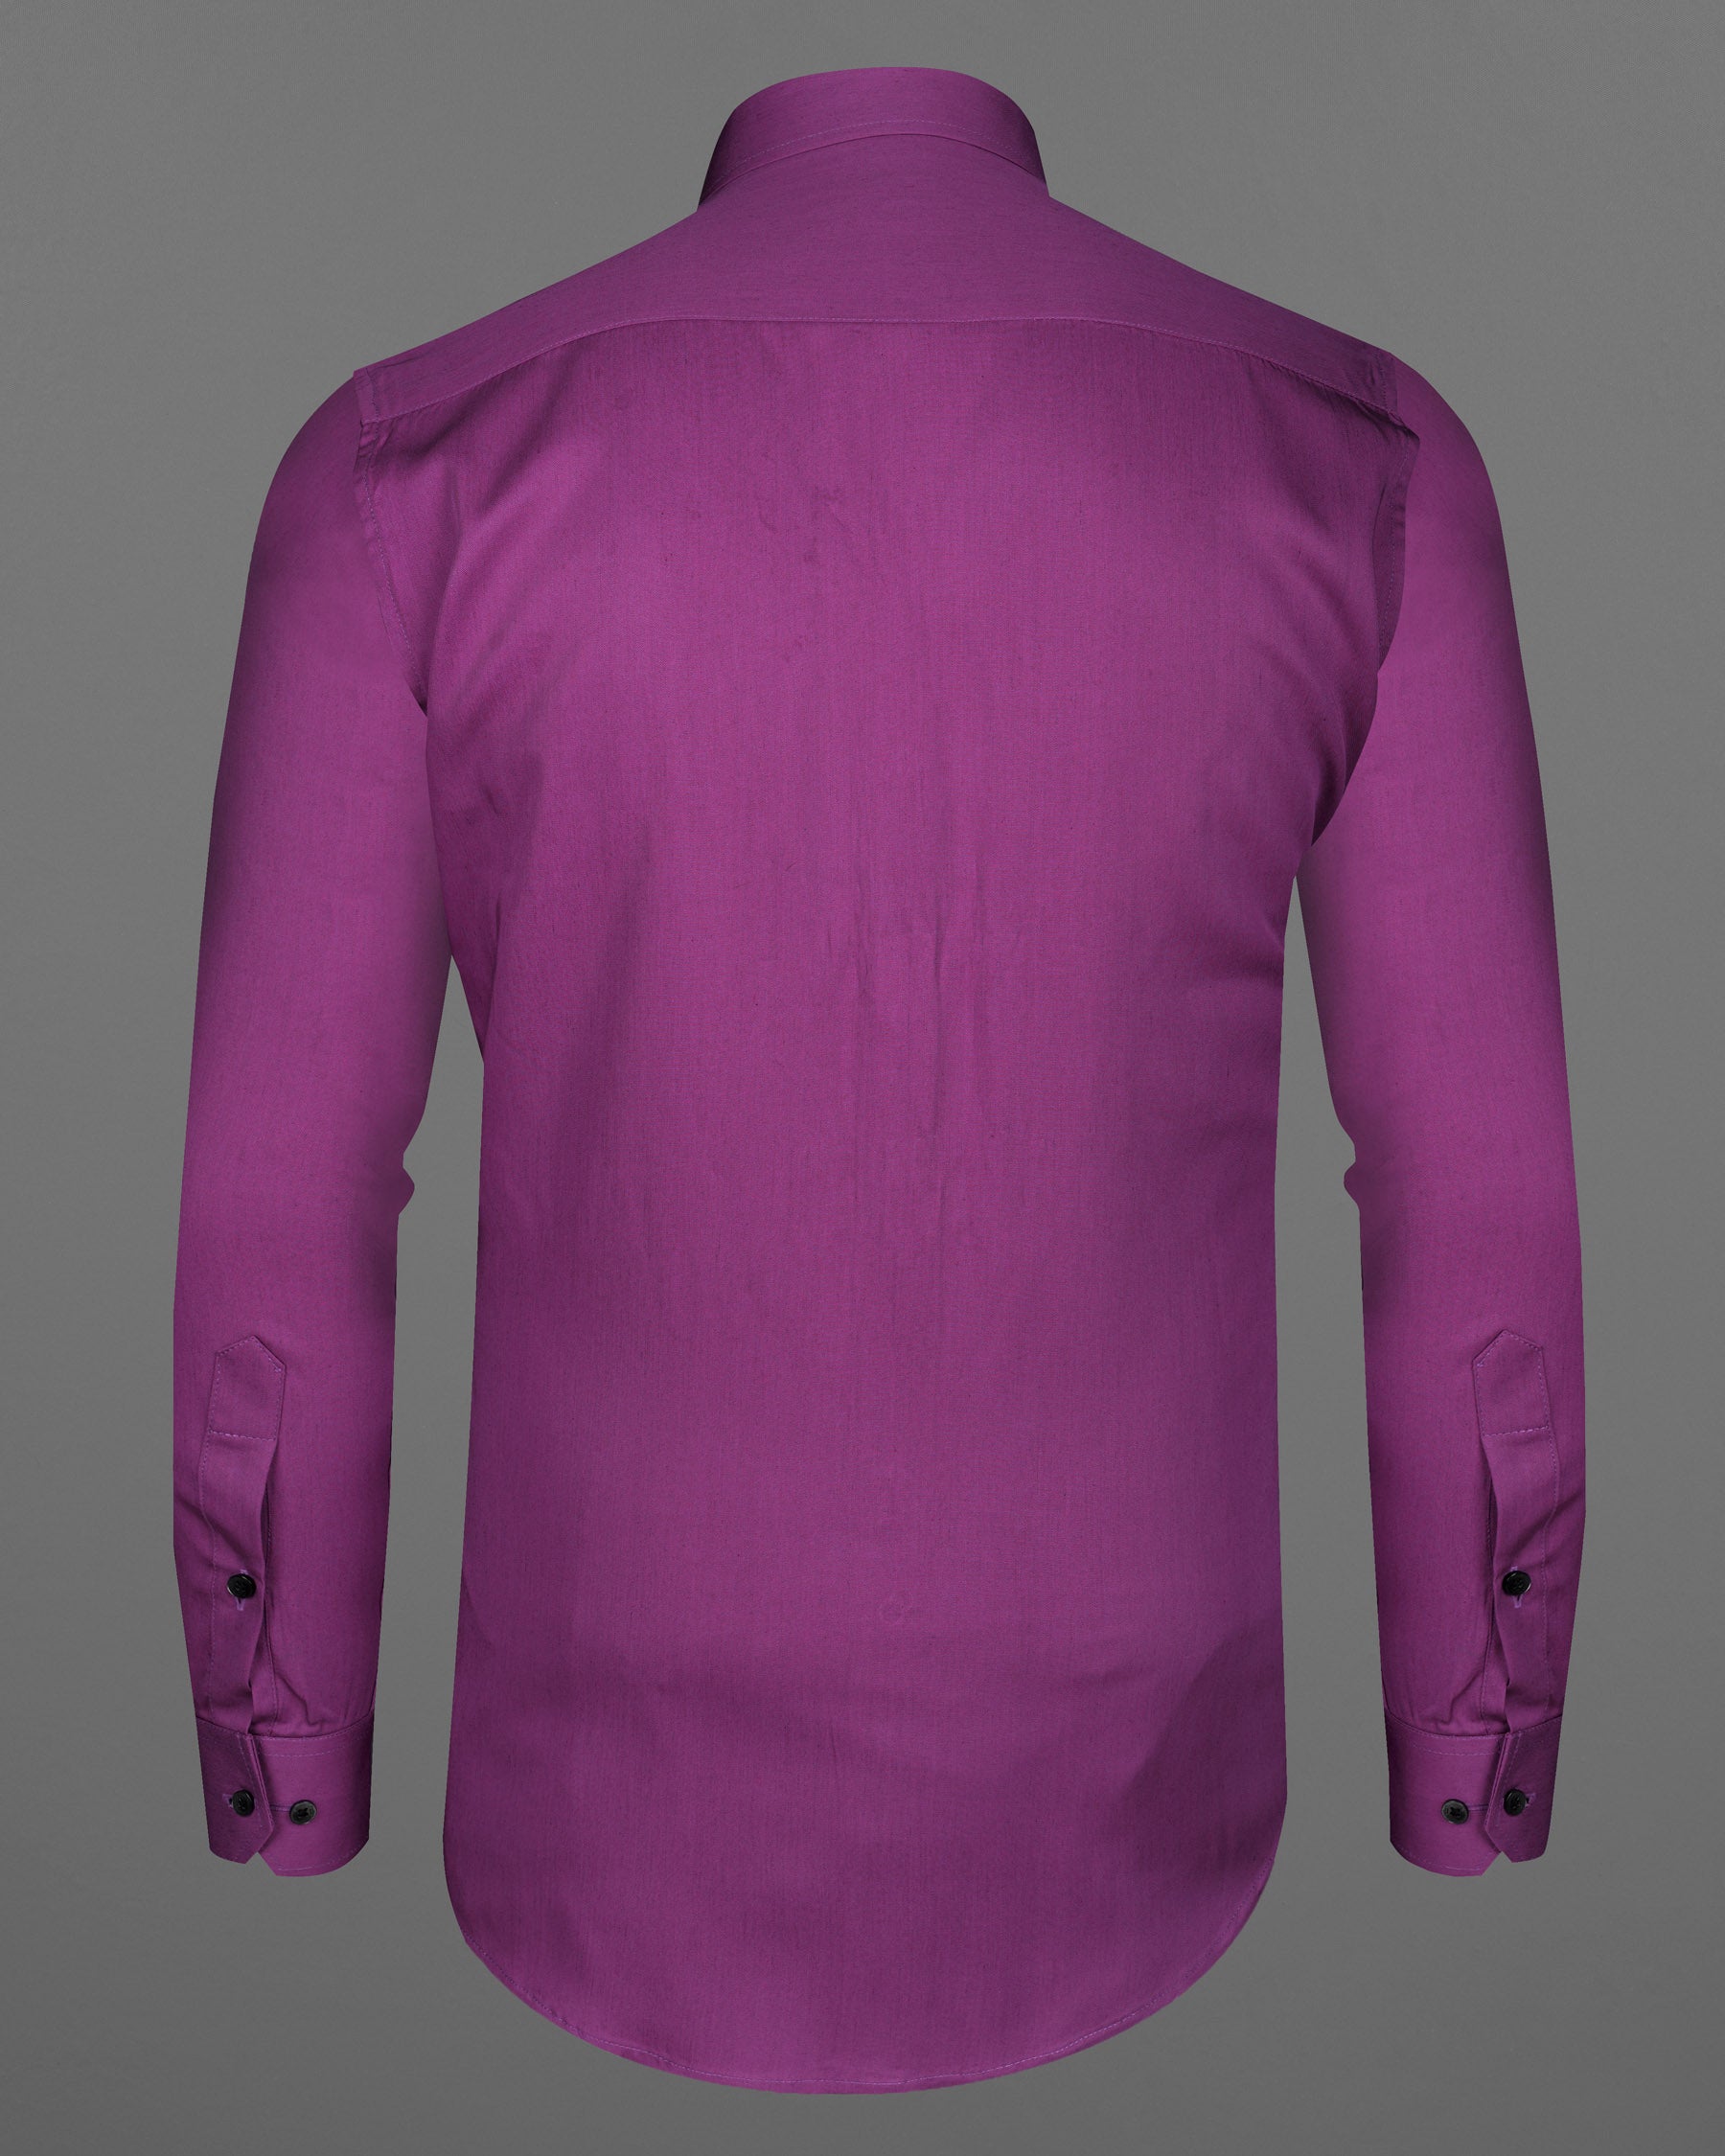 Byzantium Purple Premium Cotton shirt 7970-BLK-38,7970-BLK-H-38,7970-BLK-39,7970-BLK-H-39,7970-BLK-40,7970-BLK-H-40,7970-BLK-42,7970-BLK-H-42,7970-BLK-44,7970-BLK-H-44,7970-BLK-46,7970-BLK-H-46,7970-BLK-48,7970-BLK-H-48,7970-BLK-50,7970-BLK-H-50,7970-BLK-52,7970-BLK-H-52